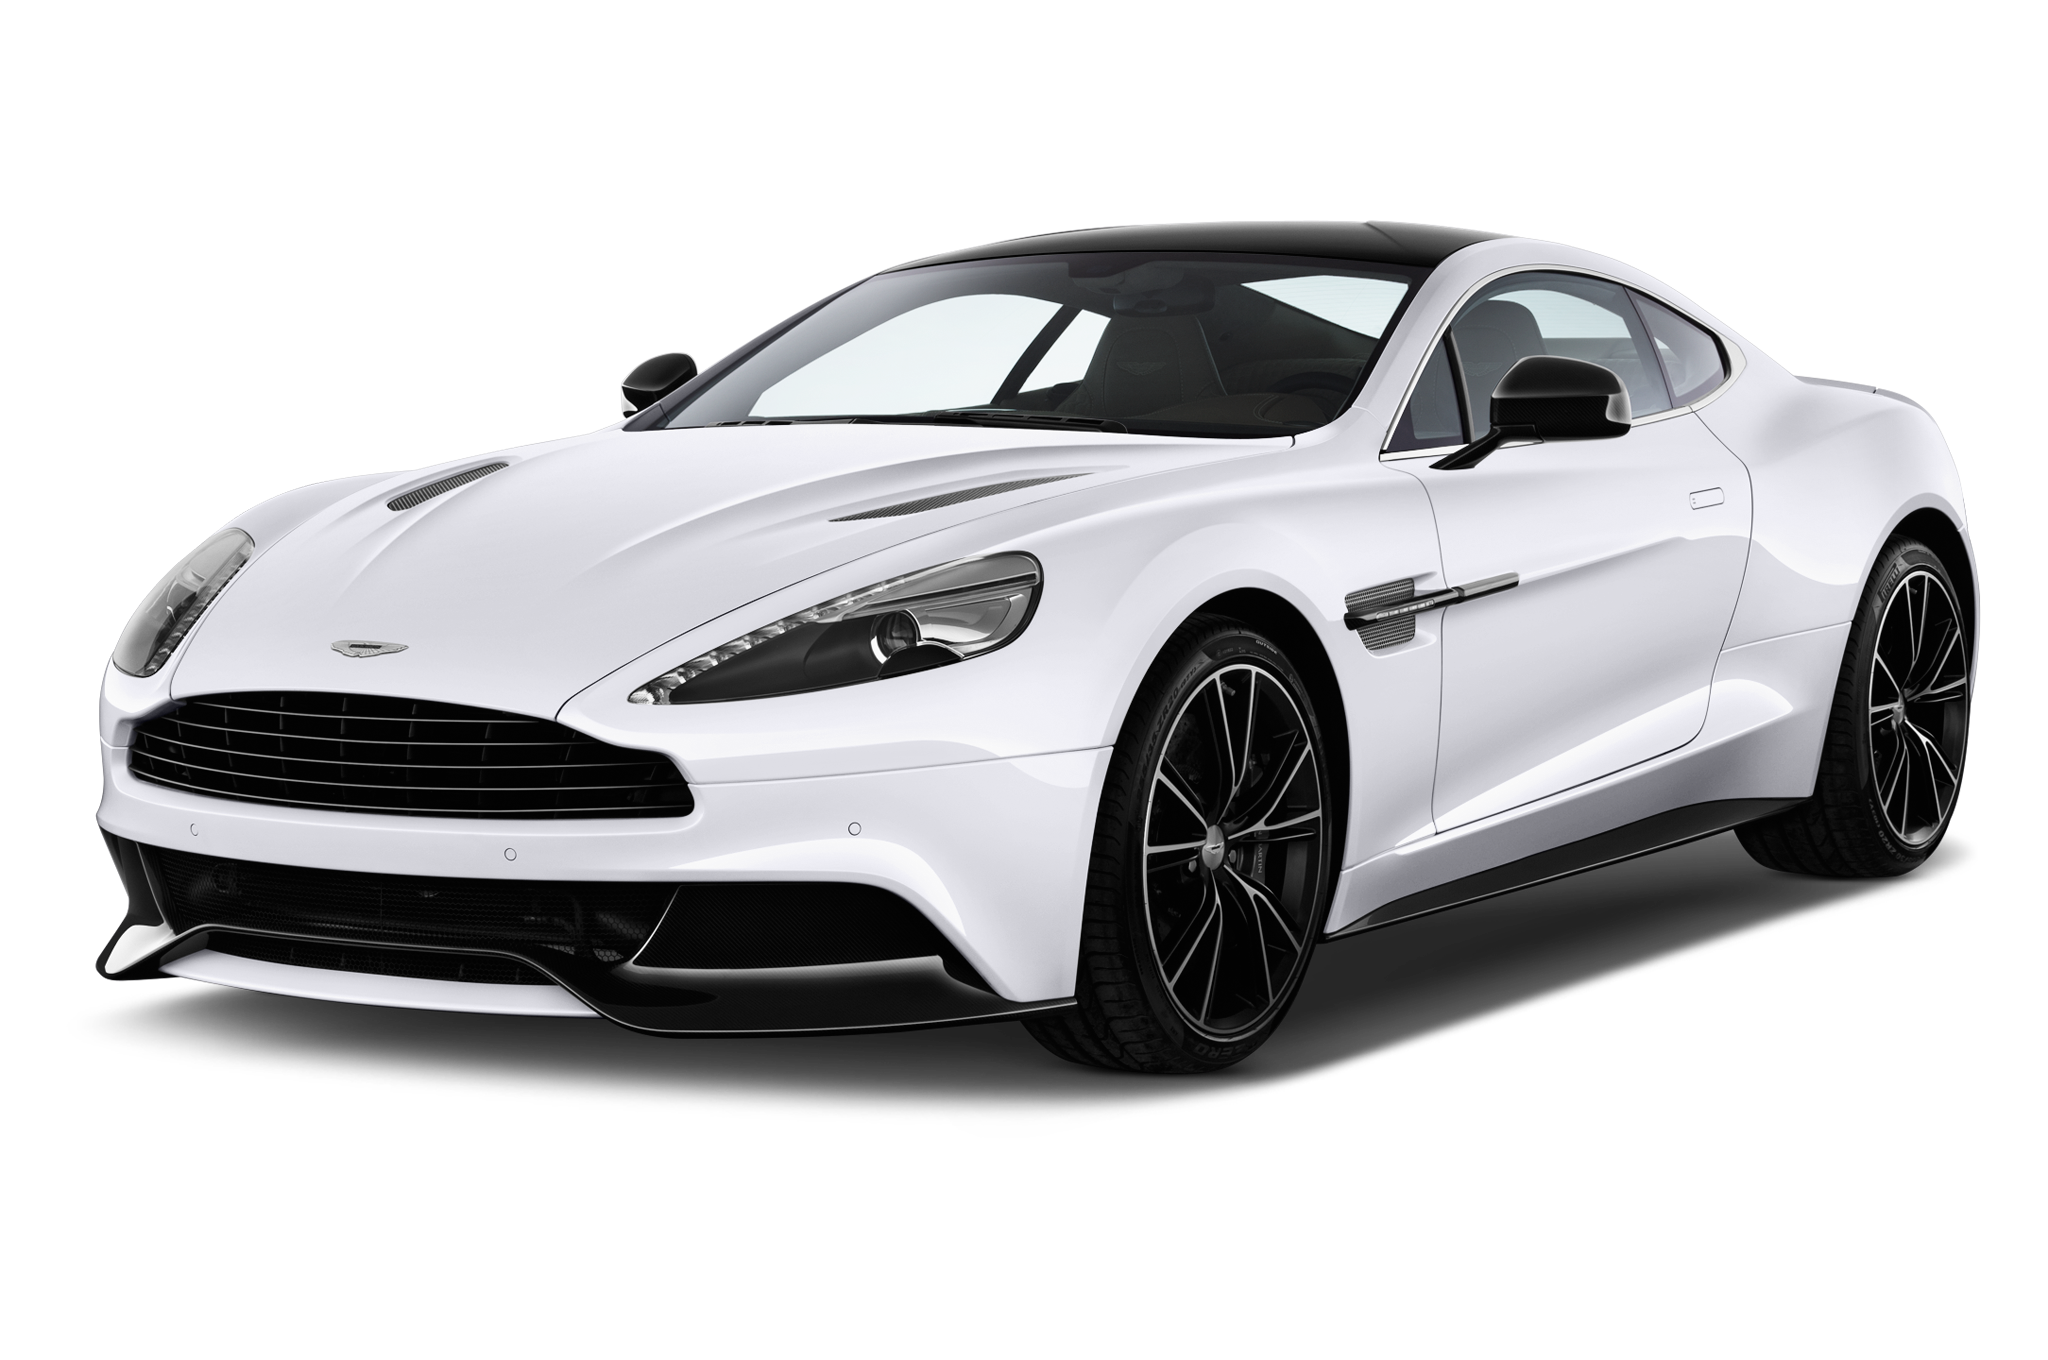 Aston Martin Vanquish Backgrounds on Wallpapers Vista